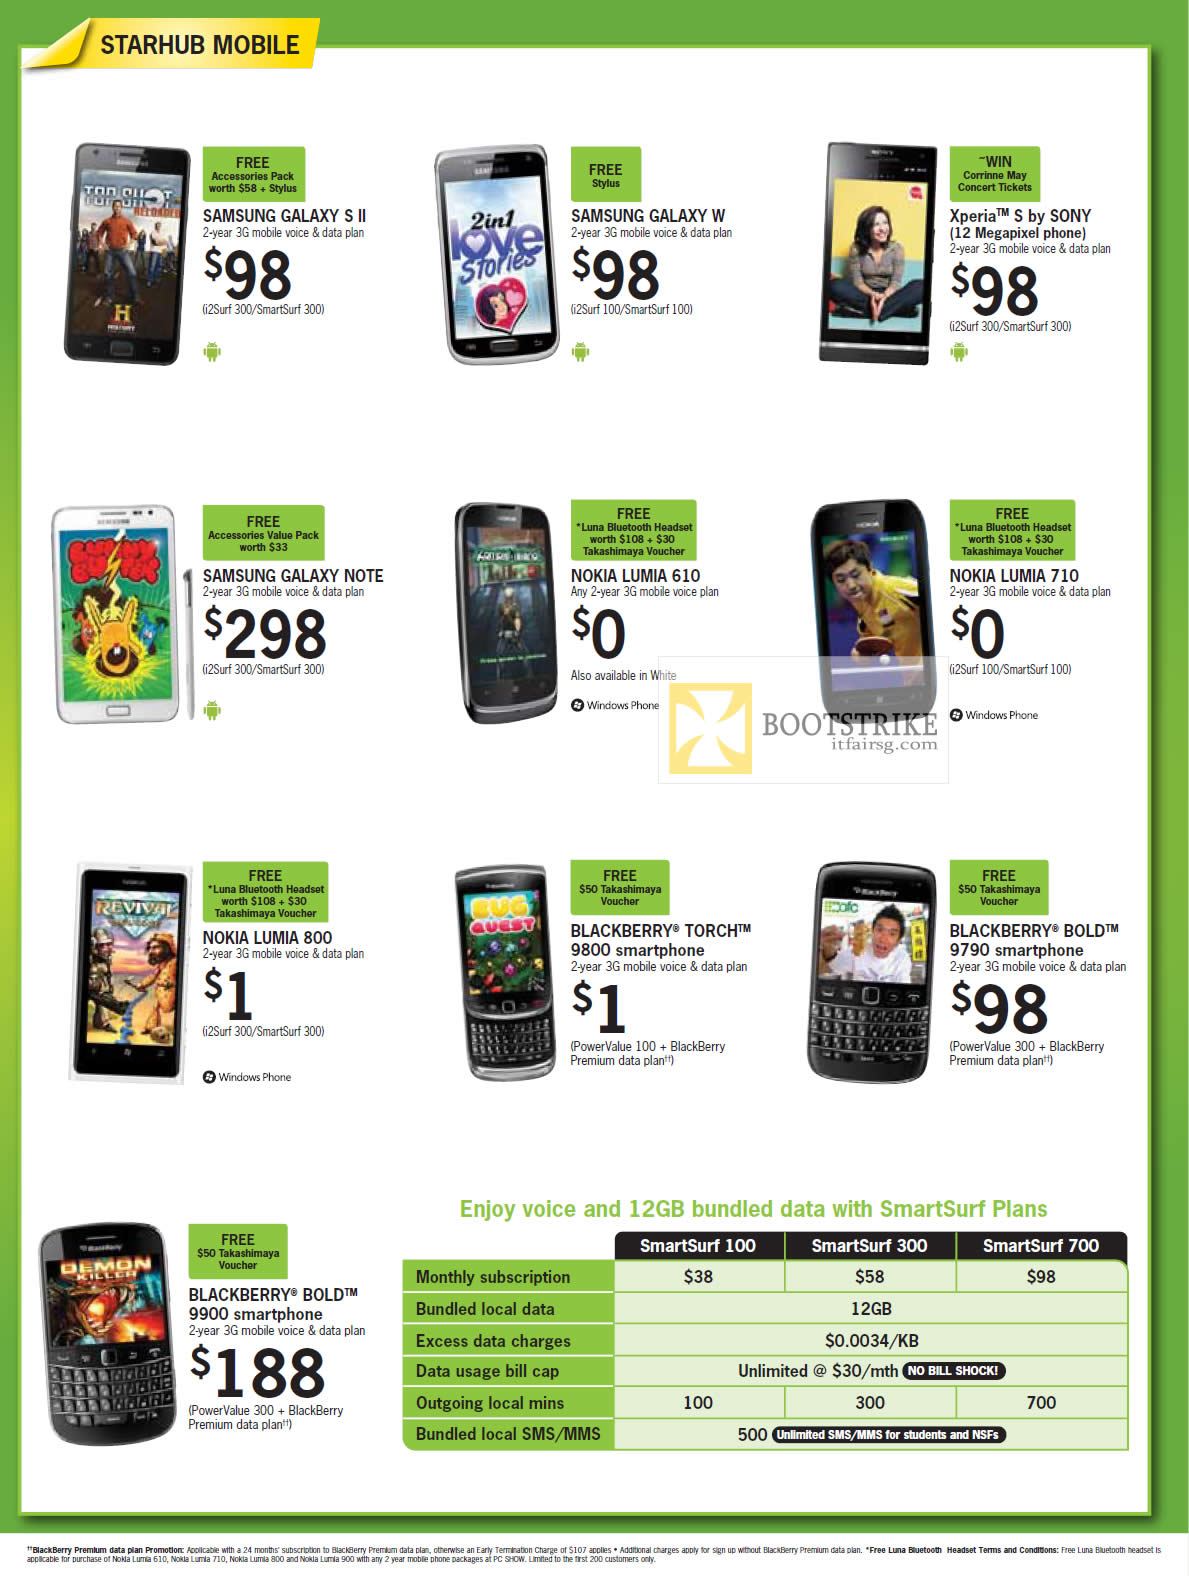 PC SHOW 2012 price list image brochure of Starhub Mobile Samsung Galaxy S II, W, Note, Nokia Lumia 610, 710, 800, Sony Xperia S, Blackberry Torch 9800, Bold 9790, 9900. SmartSurf